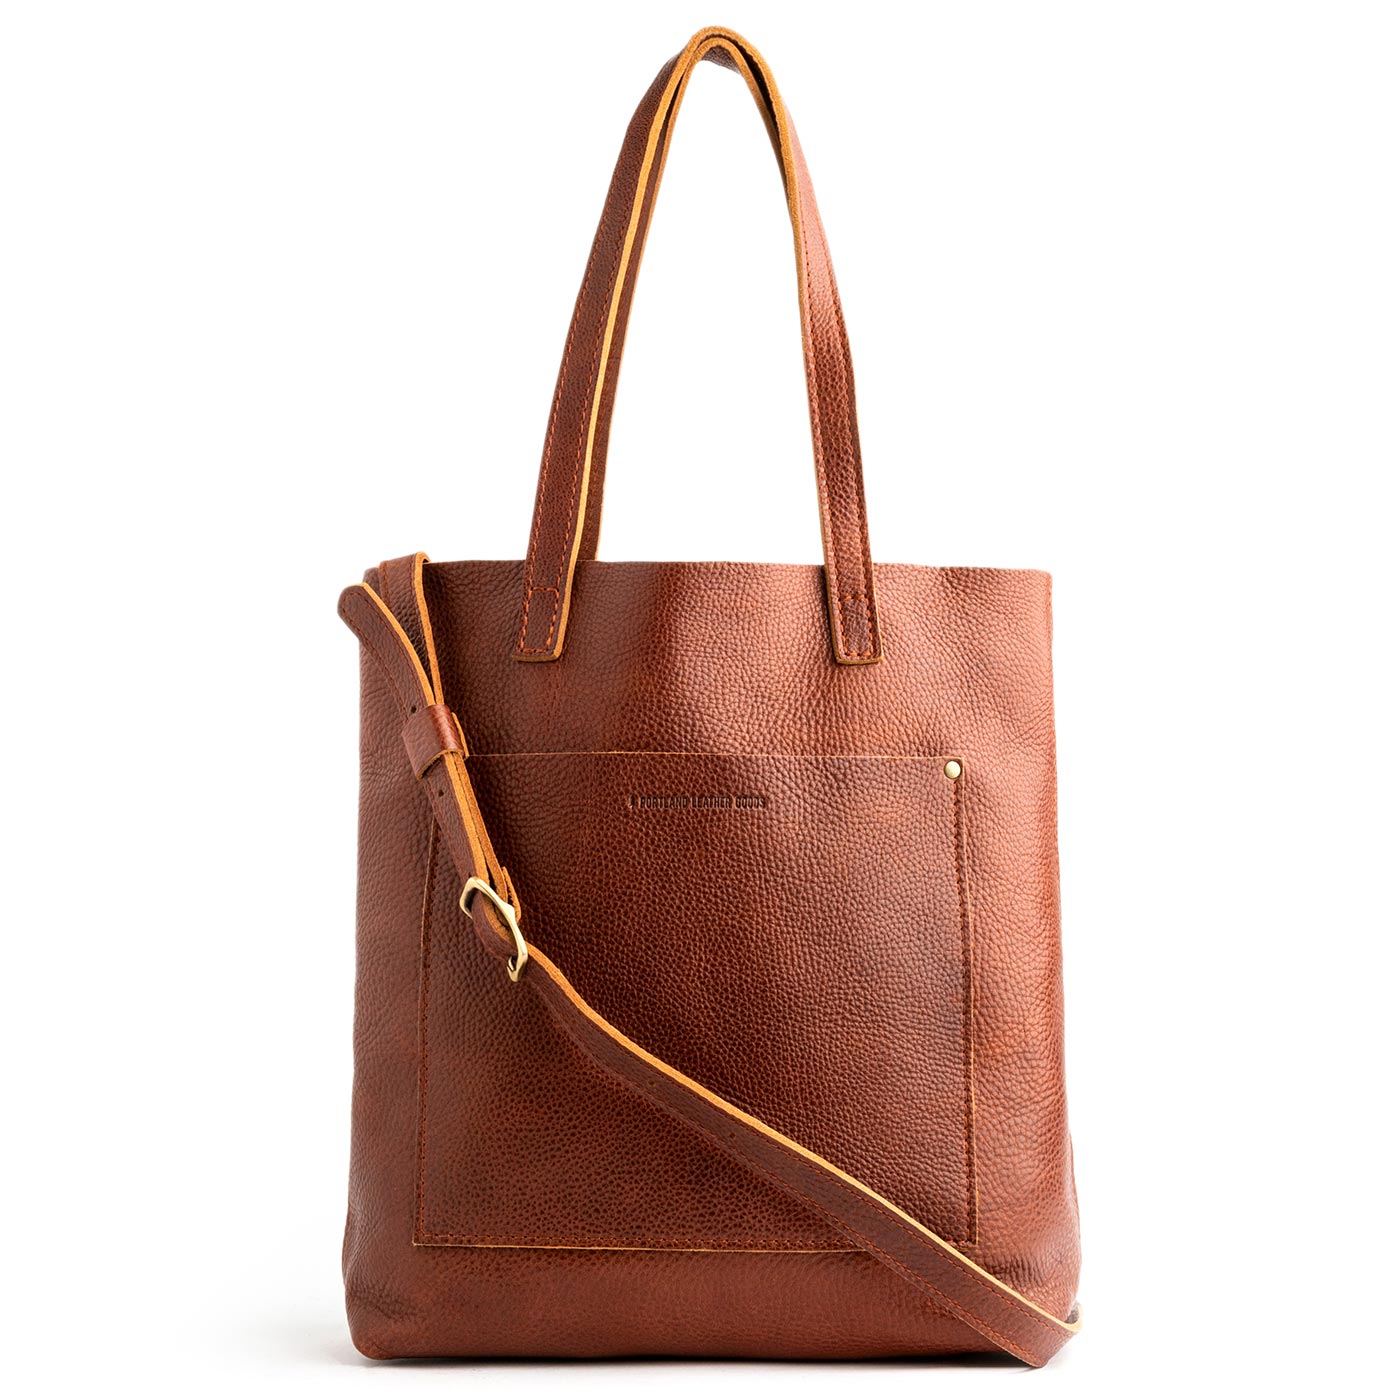 Vintage CHLOE Leather Purse Handbag With Brass Details | eBay